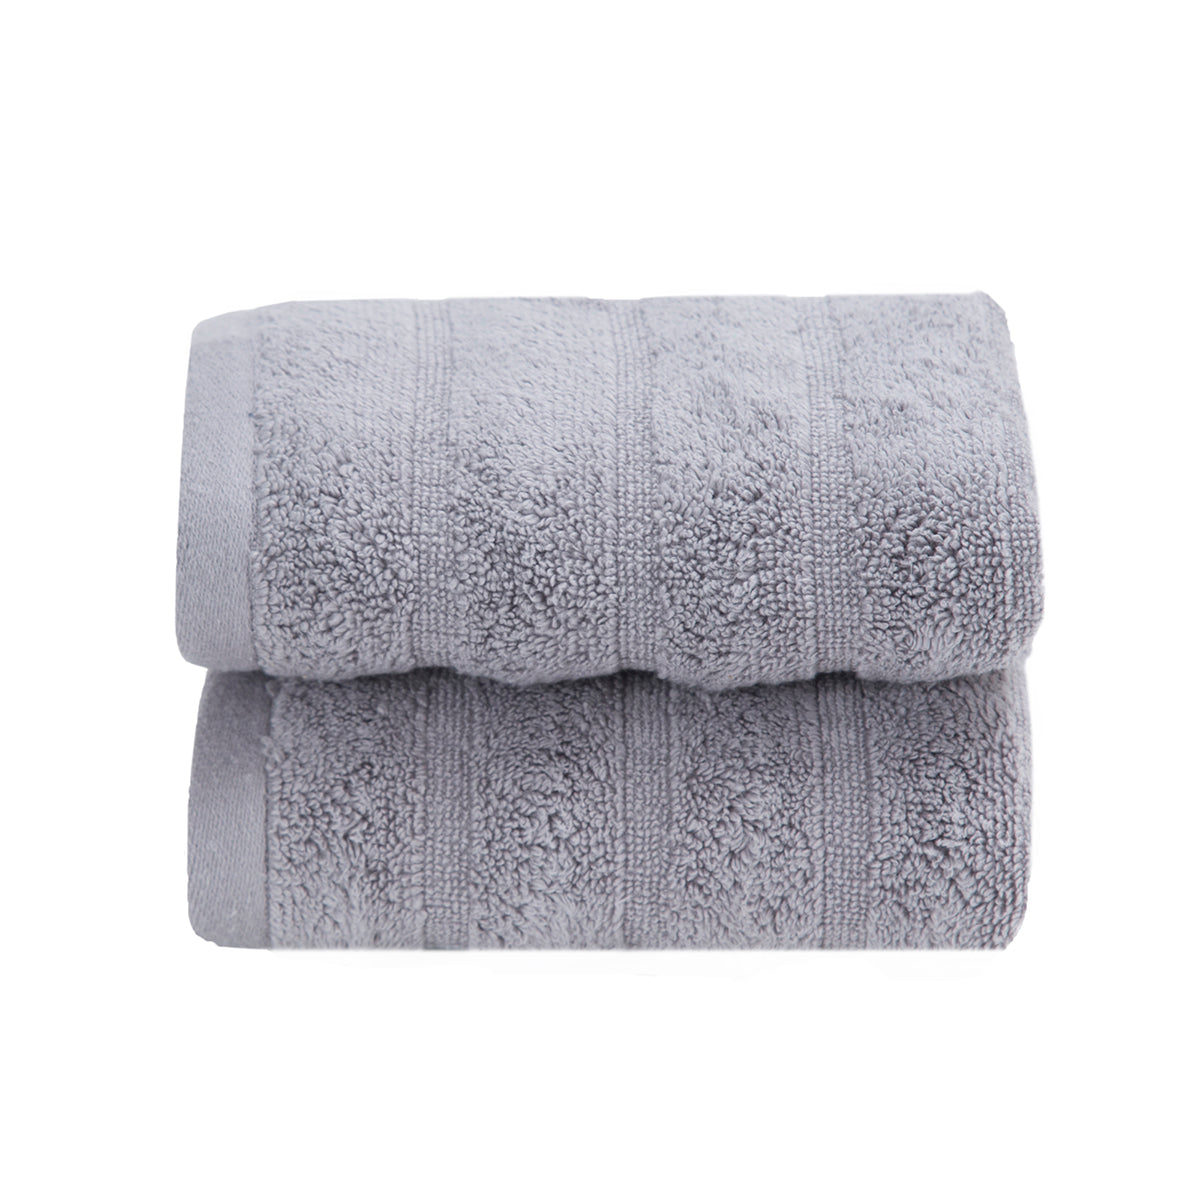 Casper Antimicrobial Antifungal Super Absorbent & Lofty Frost Grey Towel Set